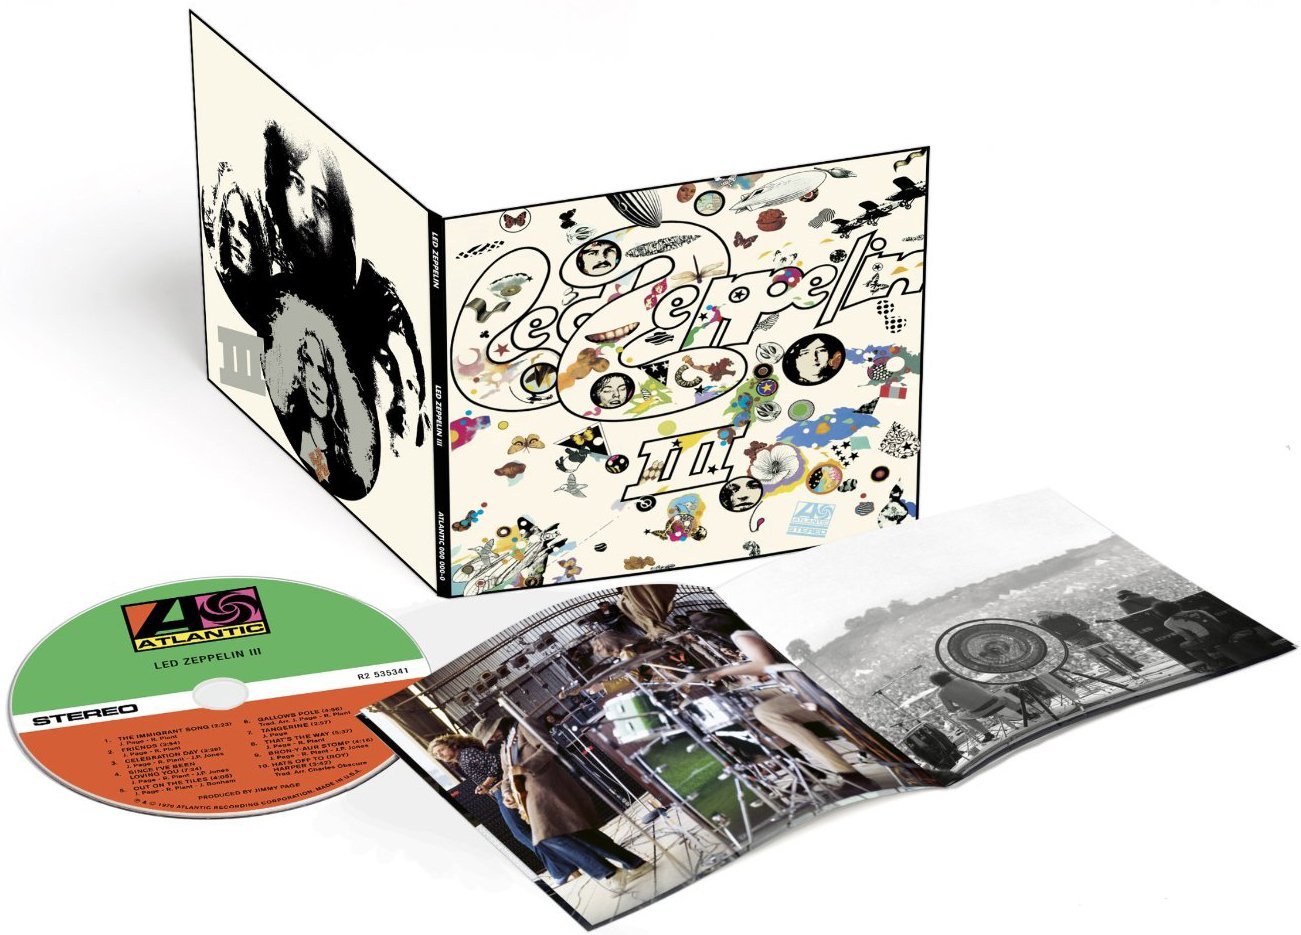 Led Zeppelin "Led Zeppelin III" CD